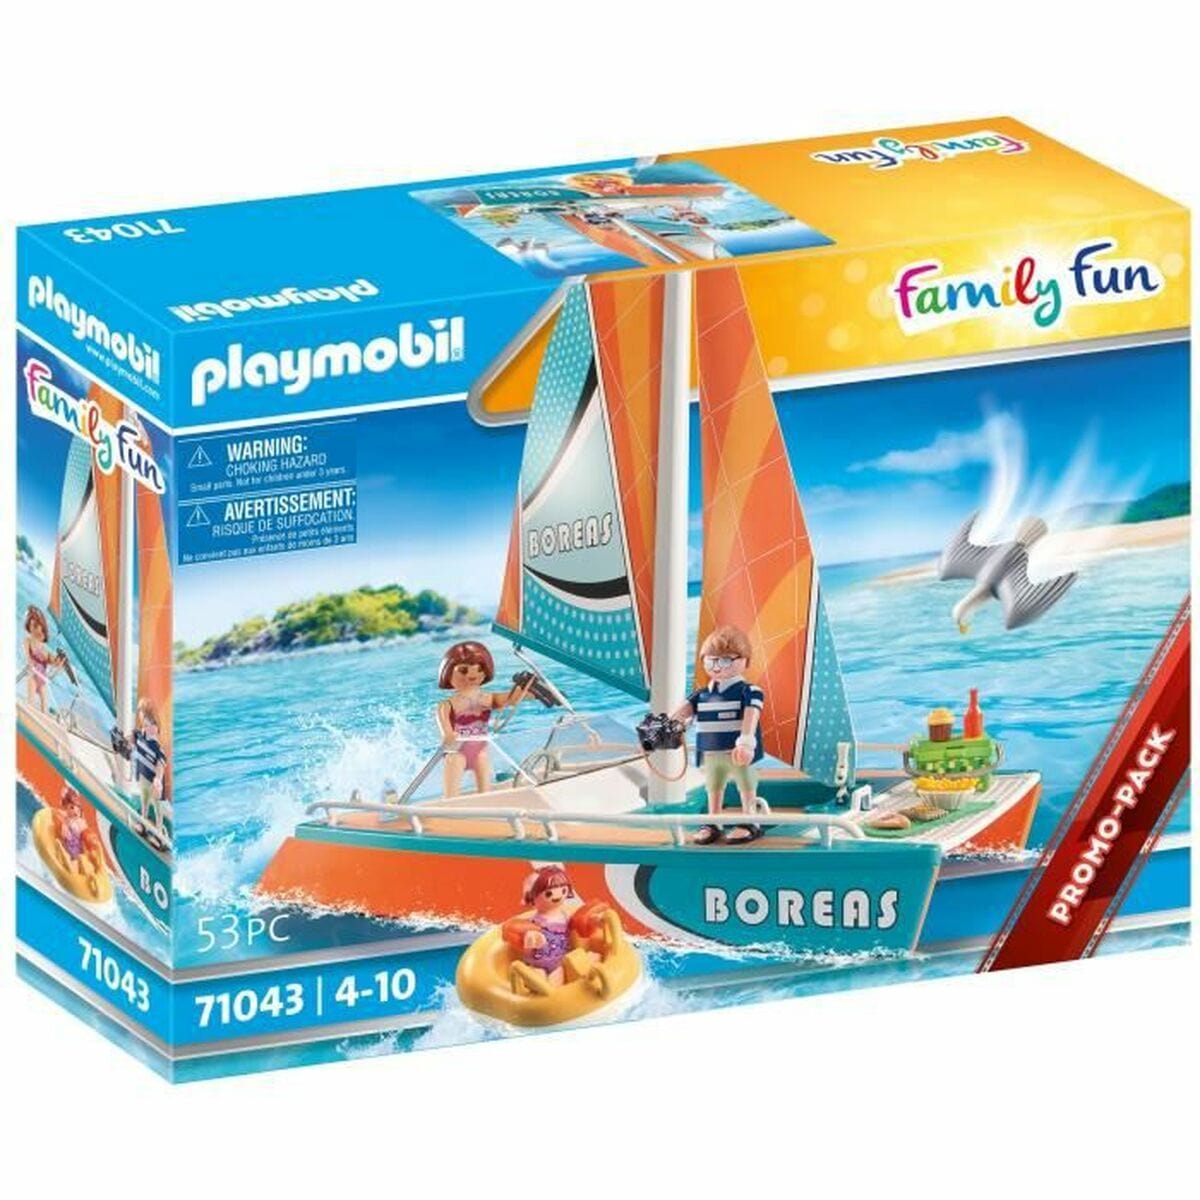 Playmobil Spielzeug | Kostüme > Spielzeug und Spiele > Action-Figuren Playset Playmobil Family Fun